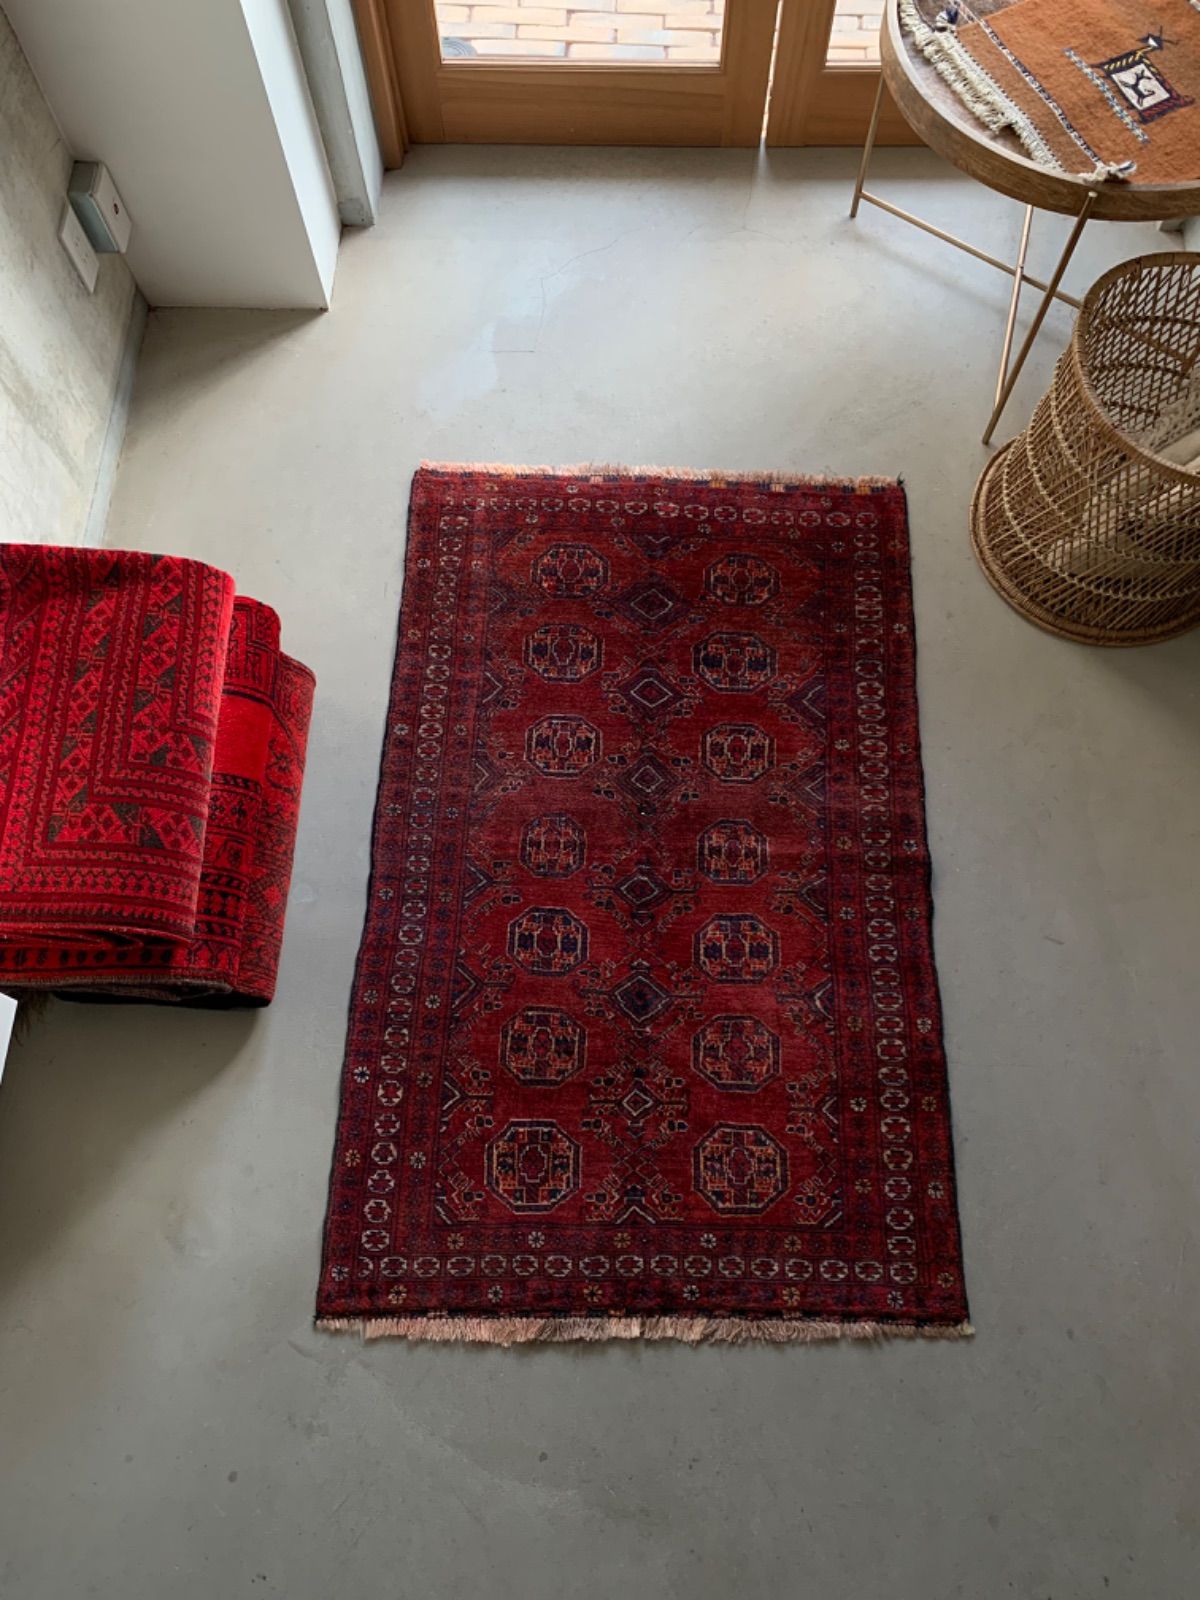 Sale! アフガニスタン トライバルラグ  手織り絨毯  292x85cm